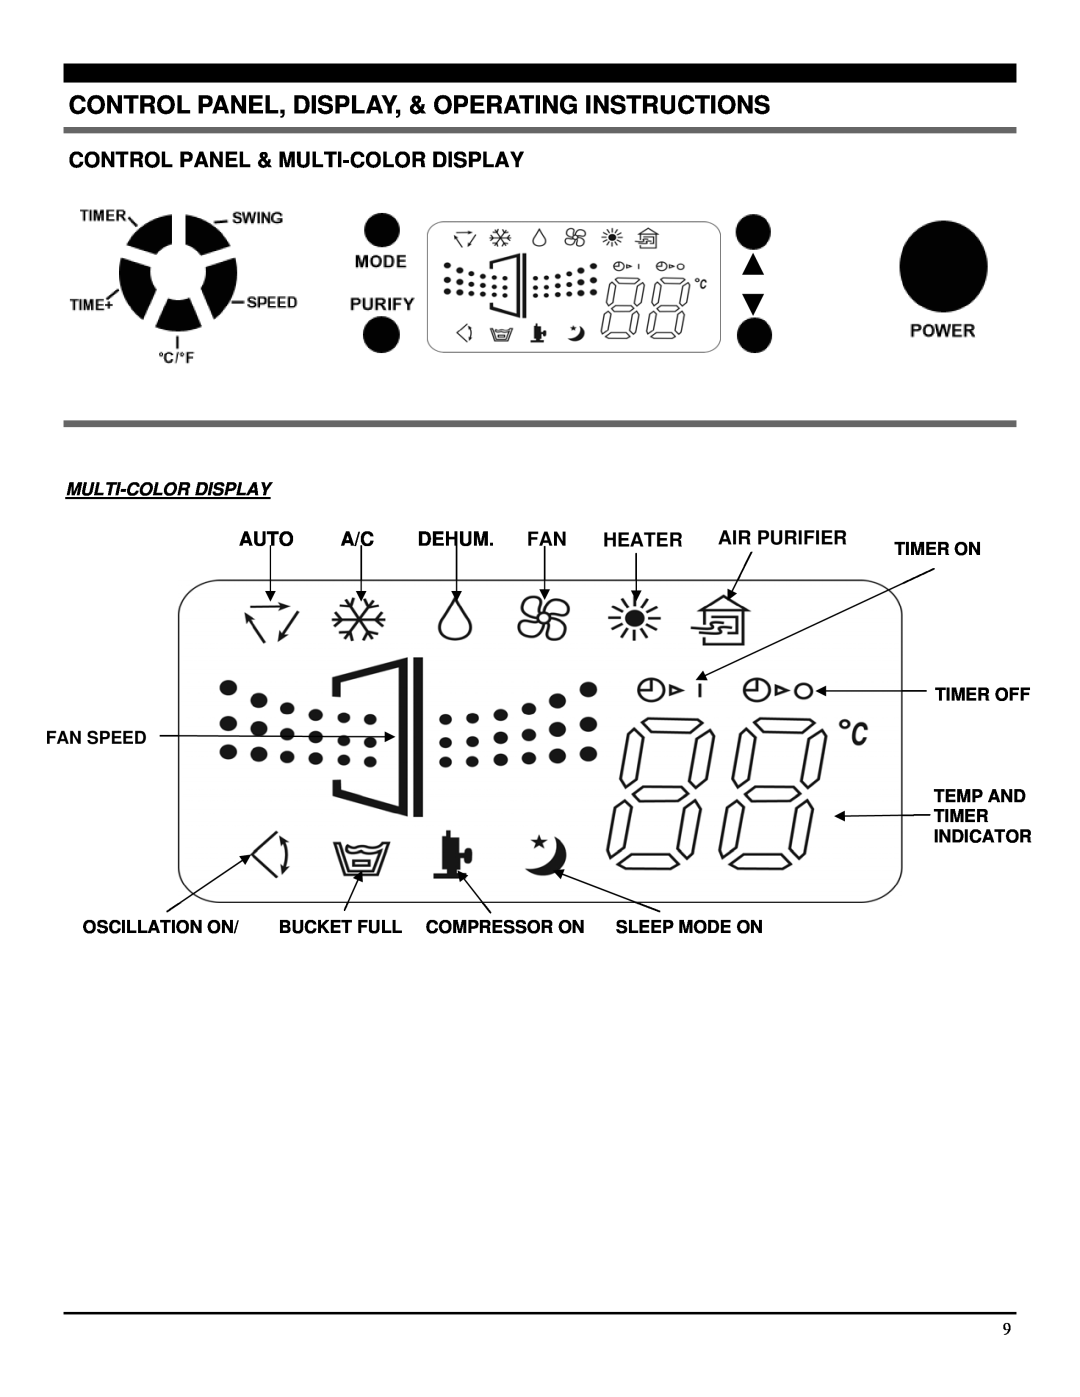 Soleus Air PA1-14R-32 Control Panel, Display, & Operating Instructions, Control Panel & Multi-Colordisplay, Auto, Dehum 